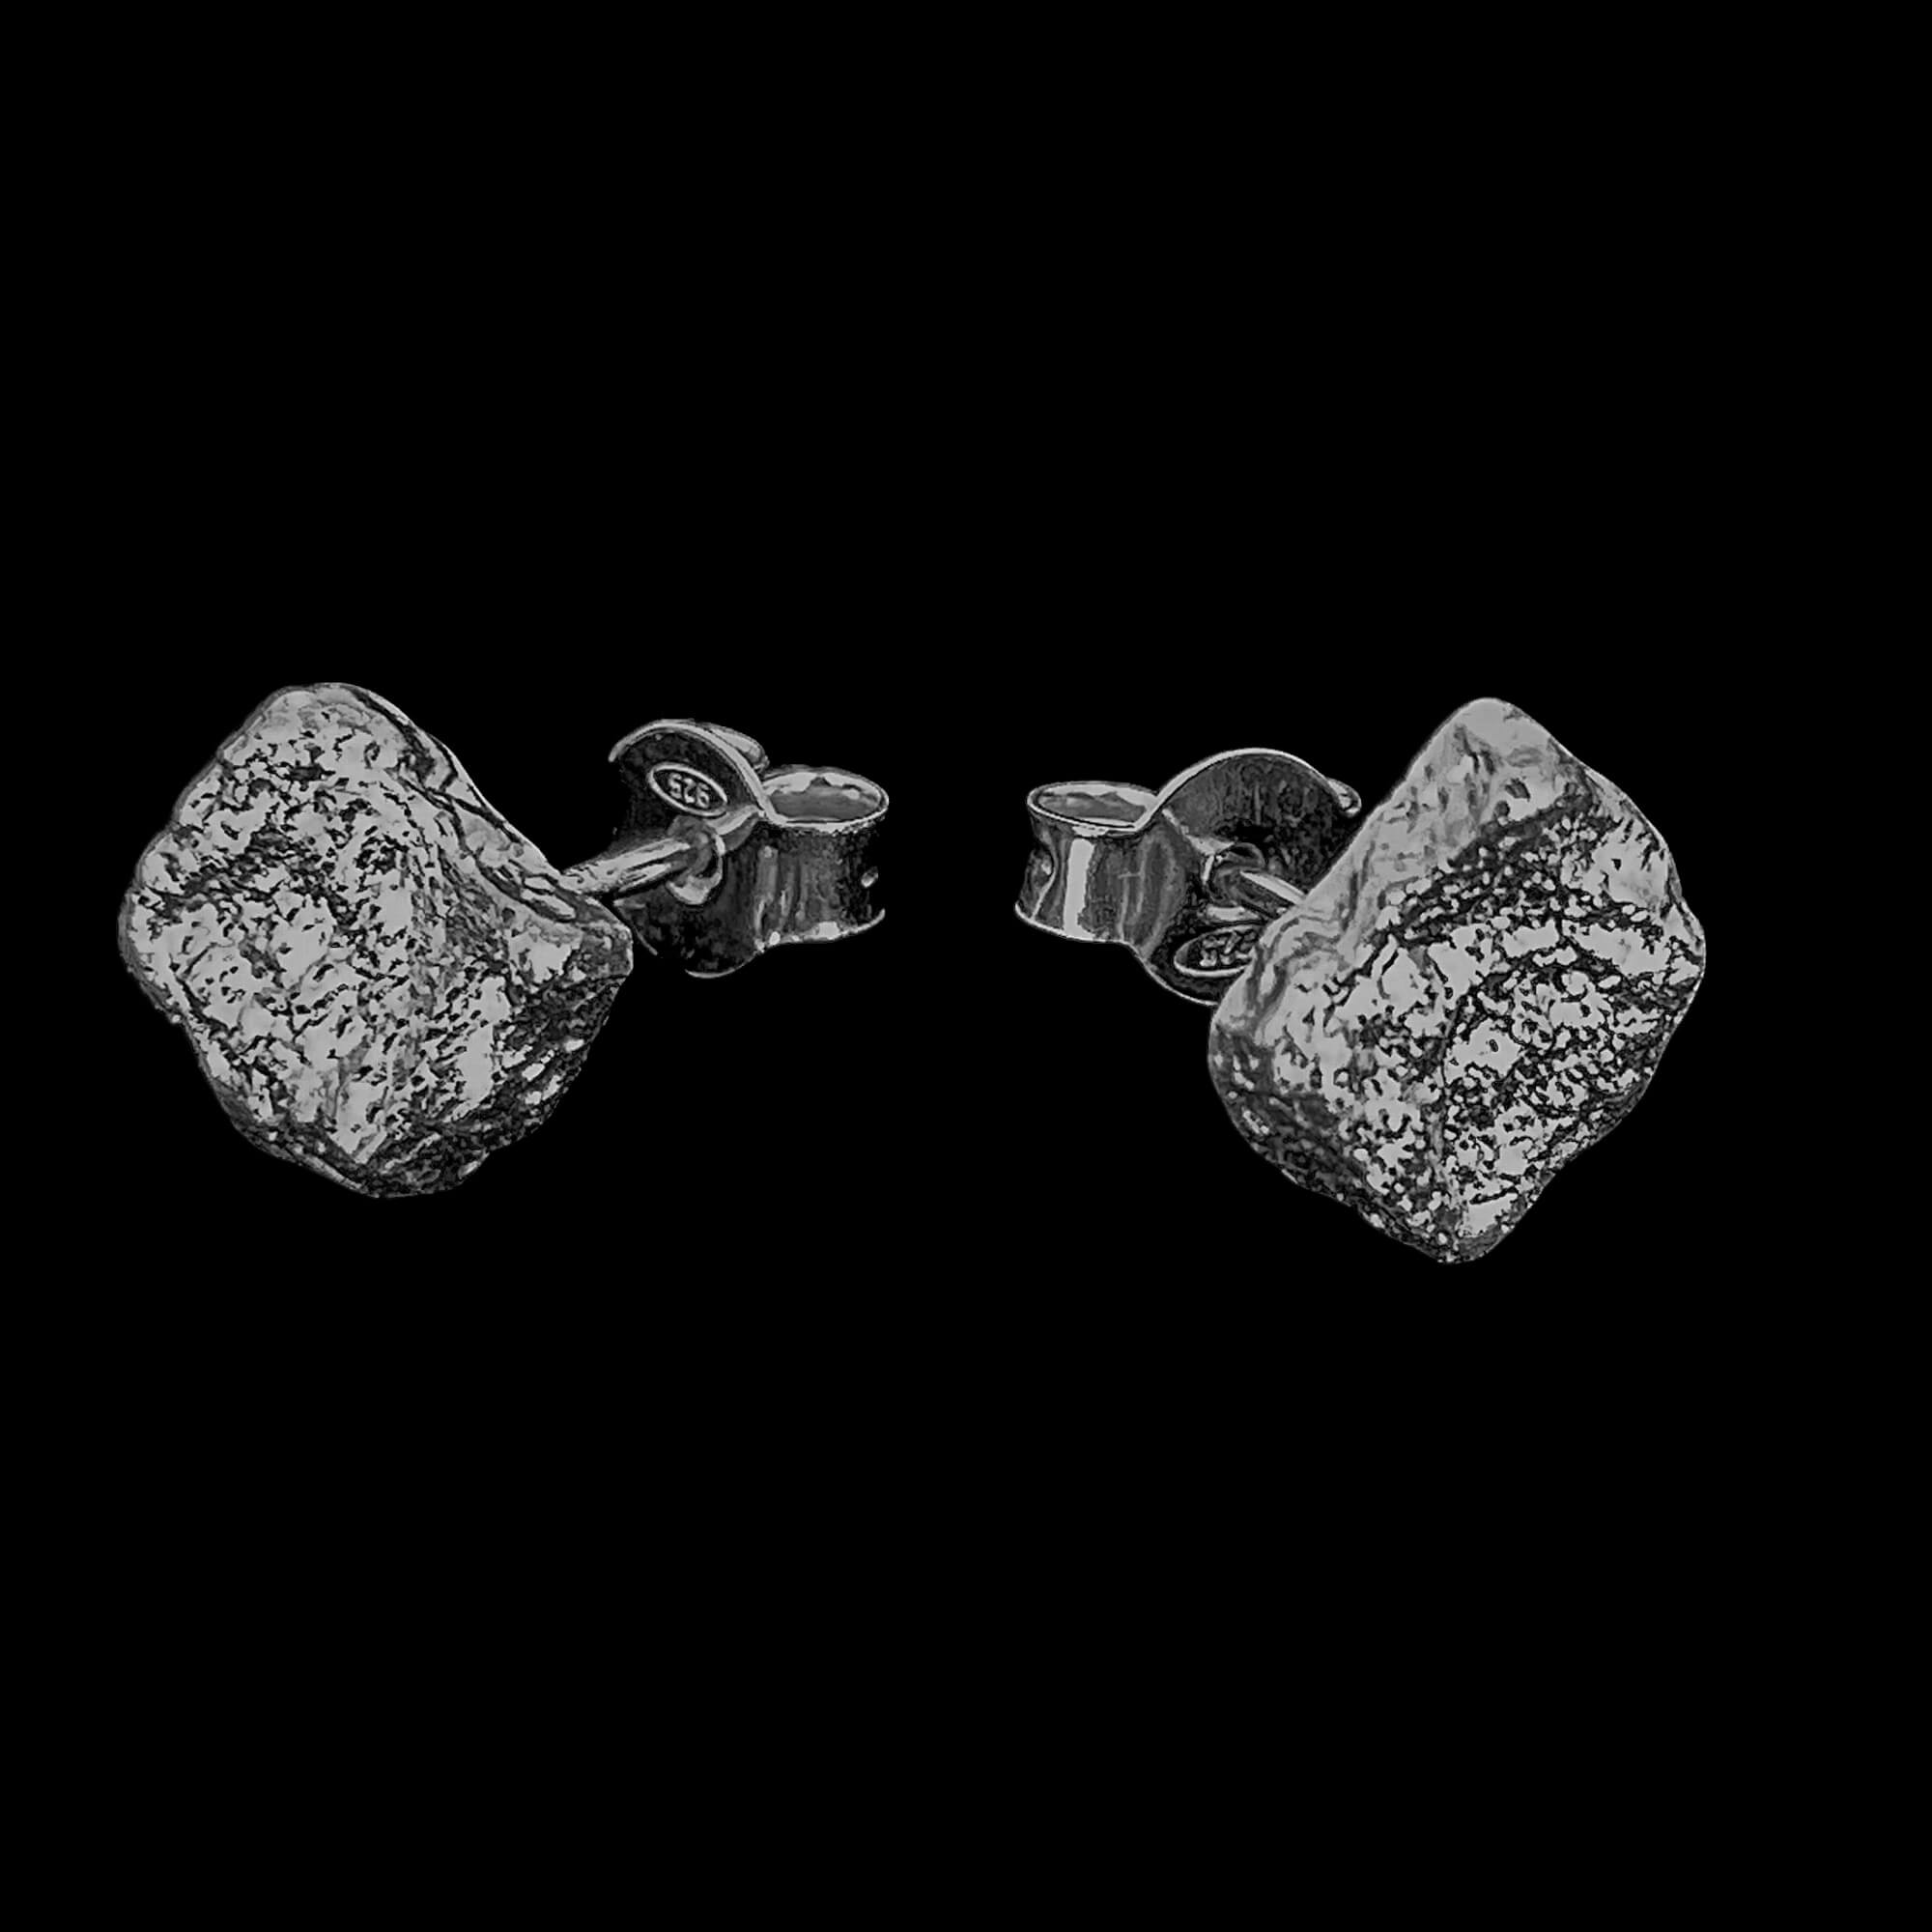 Small gray stone-shaped earrings